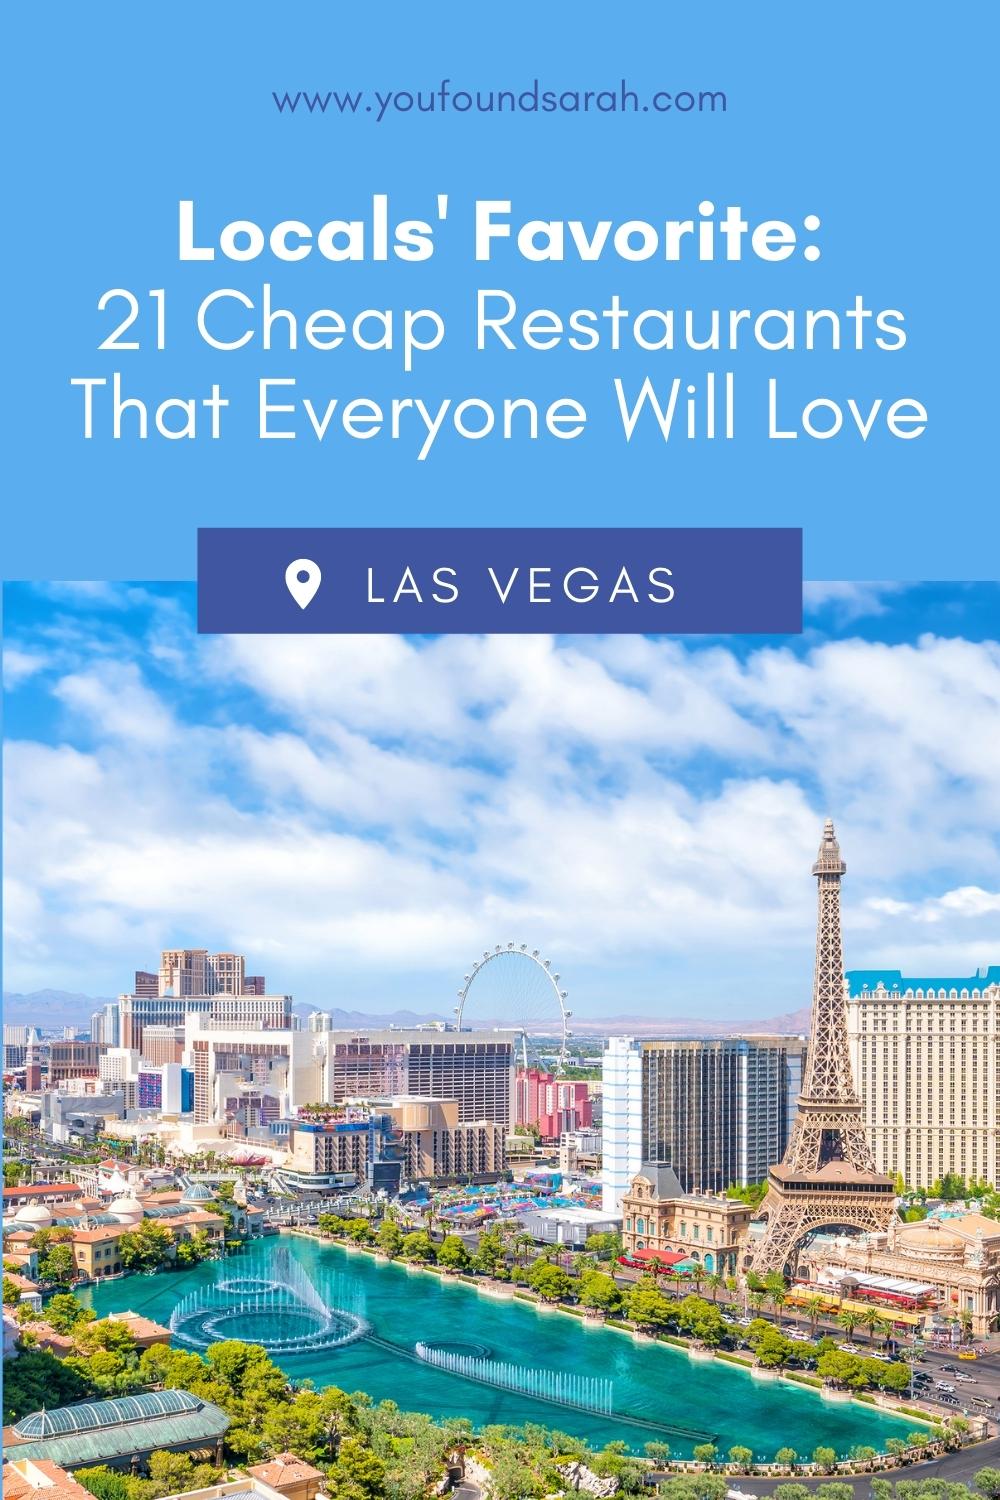 21 Cheap Restaurants in Las Vegas That Everyone Will Love!